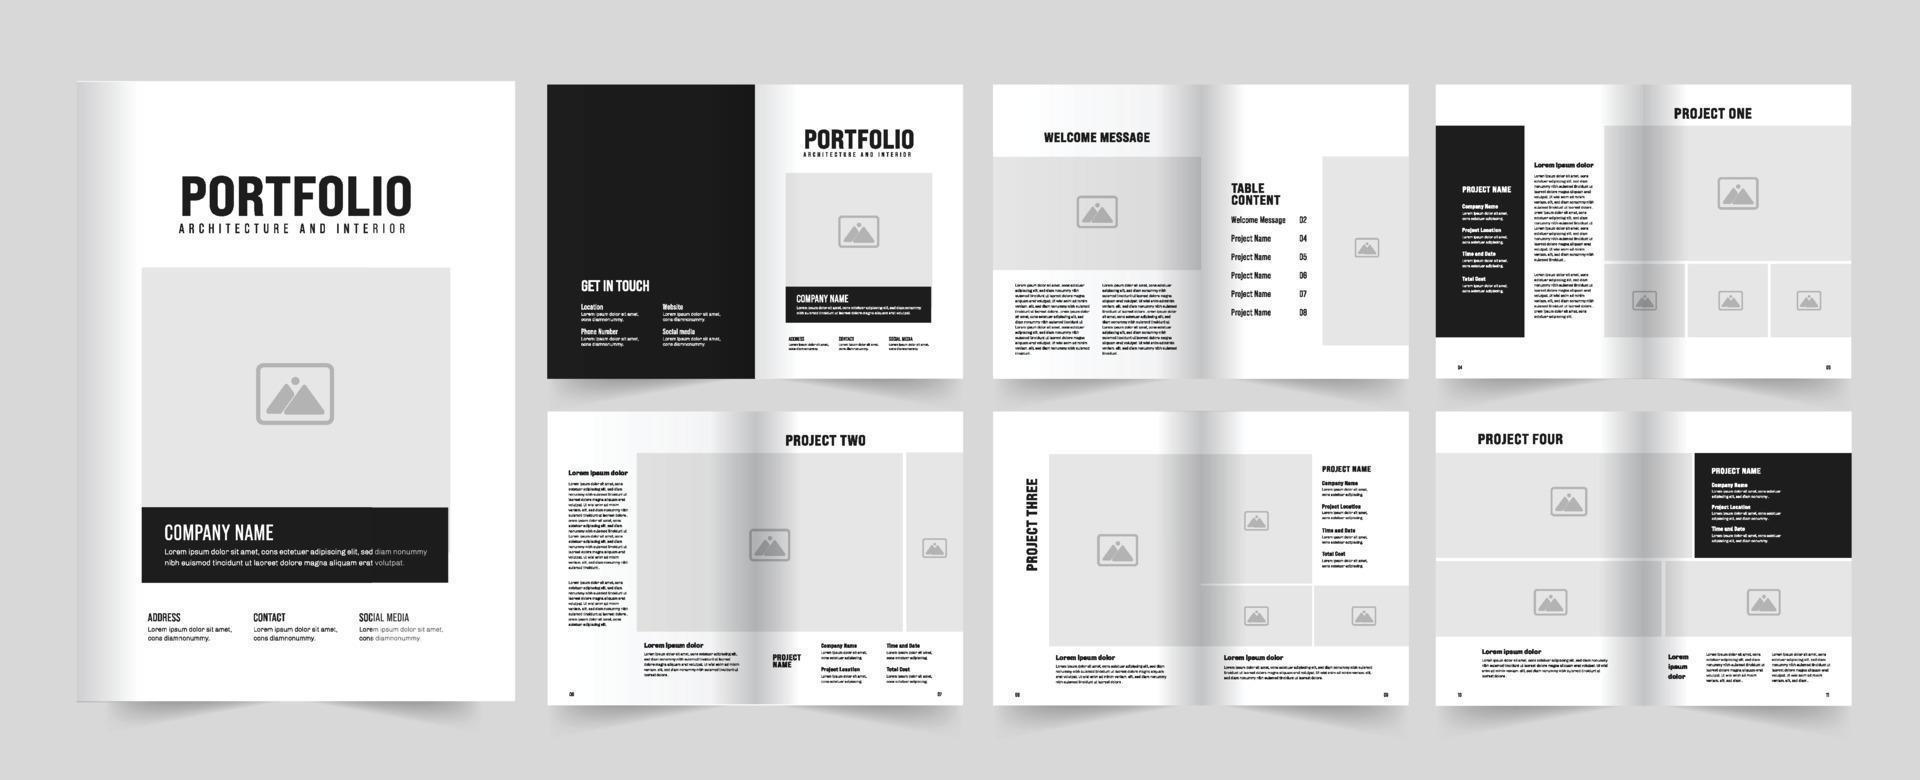 Portfolio layout design. Use for Architecture Portfolio, Interior Portfolio, Business Portfolio, photography Portfolio, graphic design Portfolio. vector